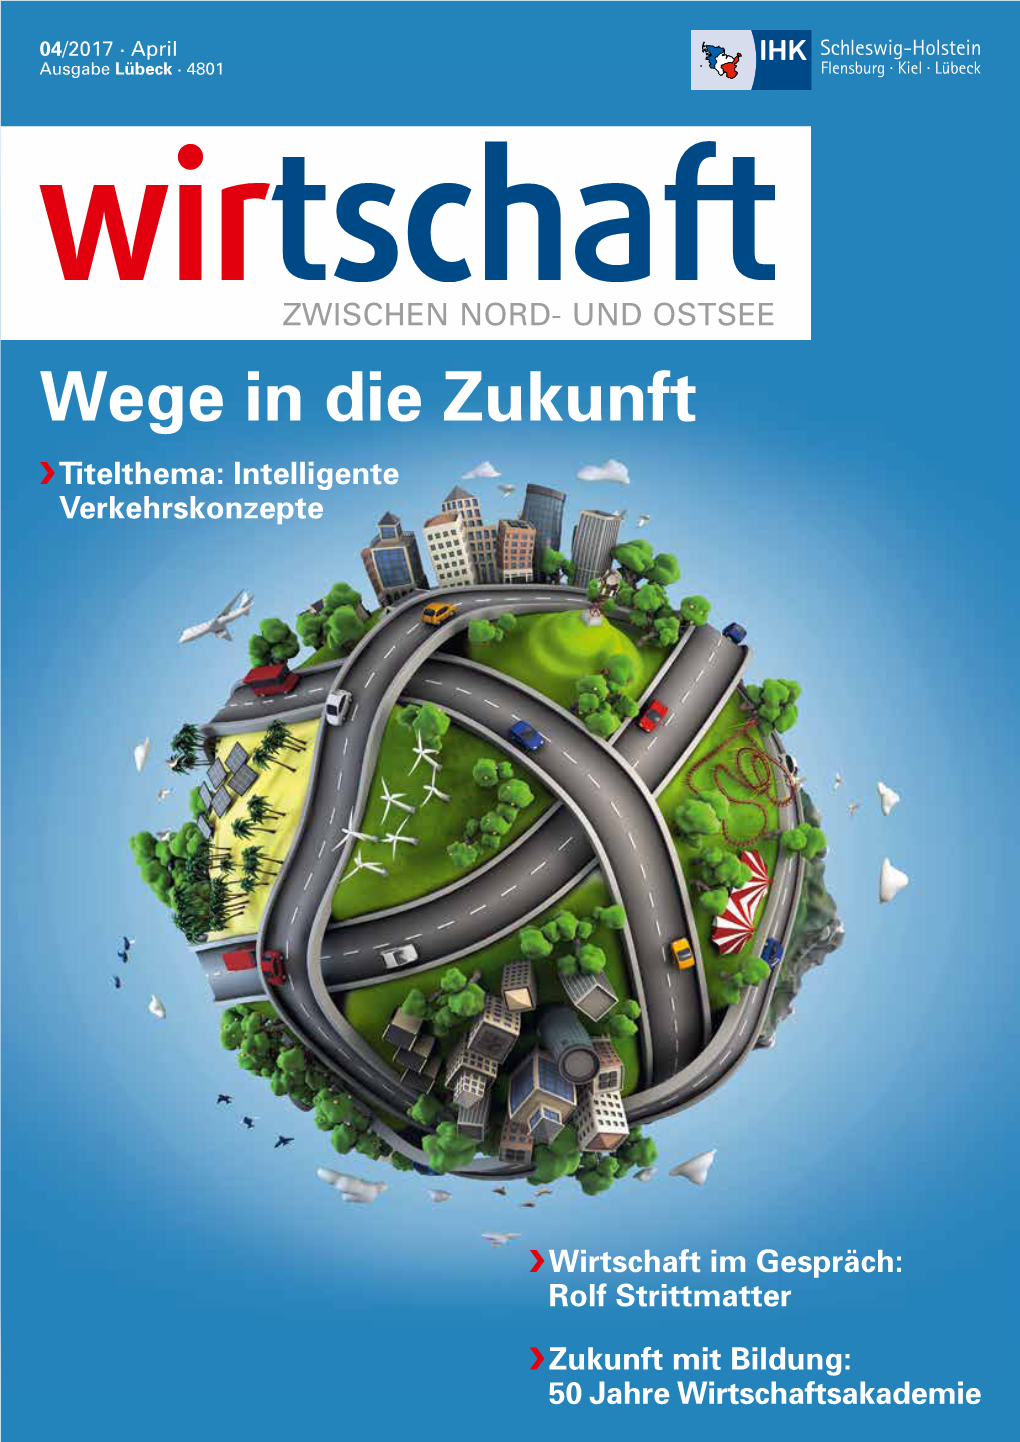 Ausgabe April 2017 Mit Regionalteil Lübeck